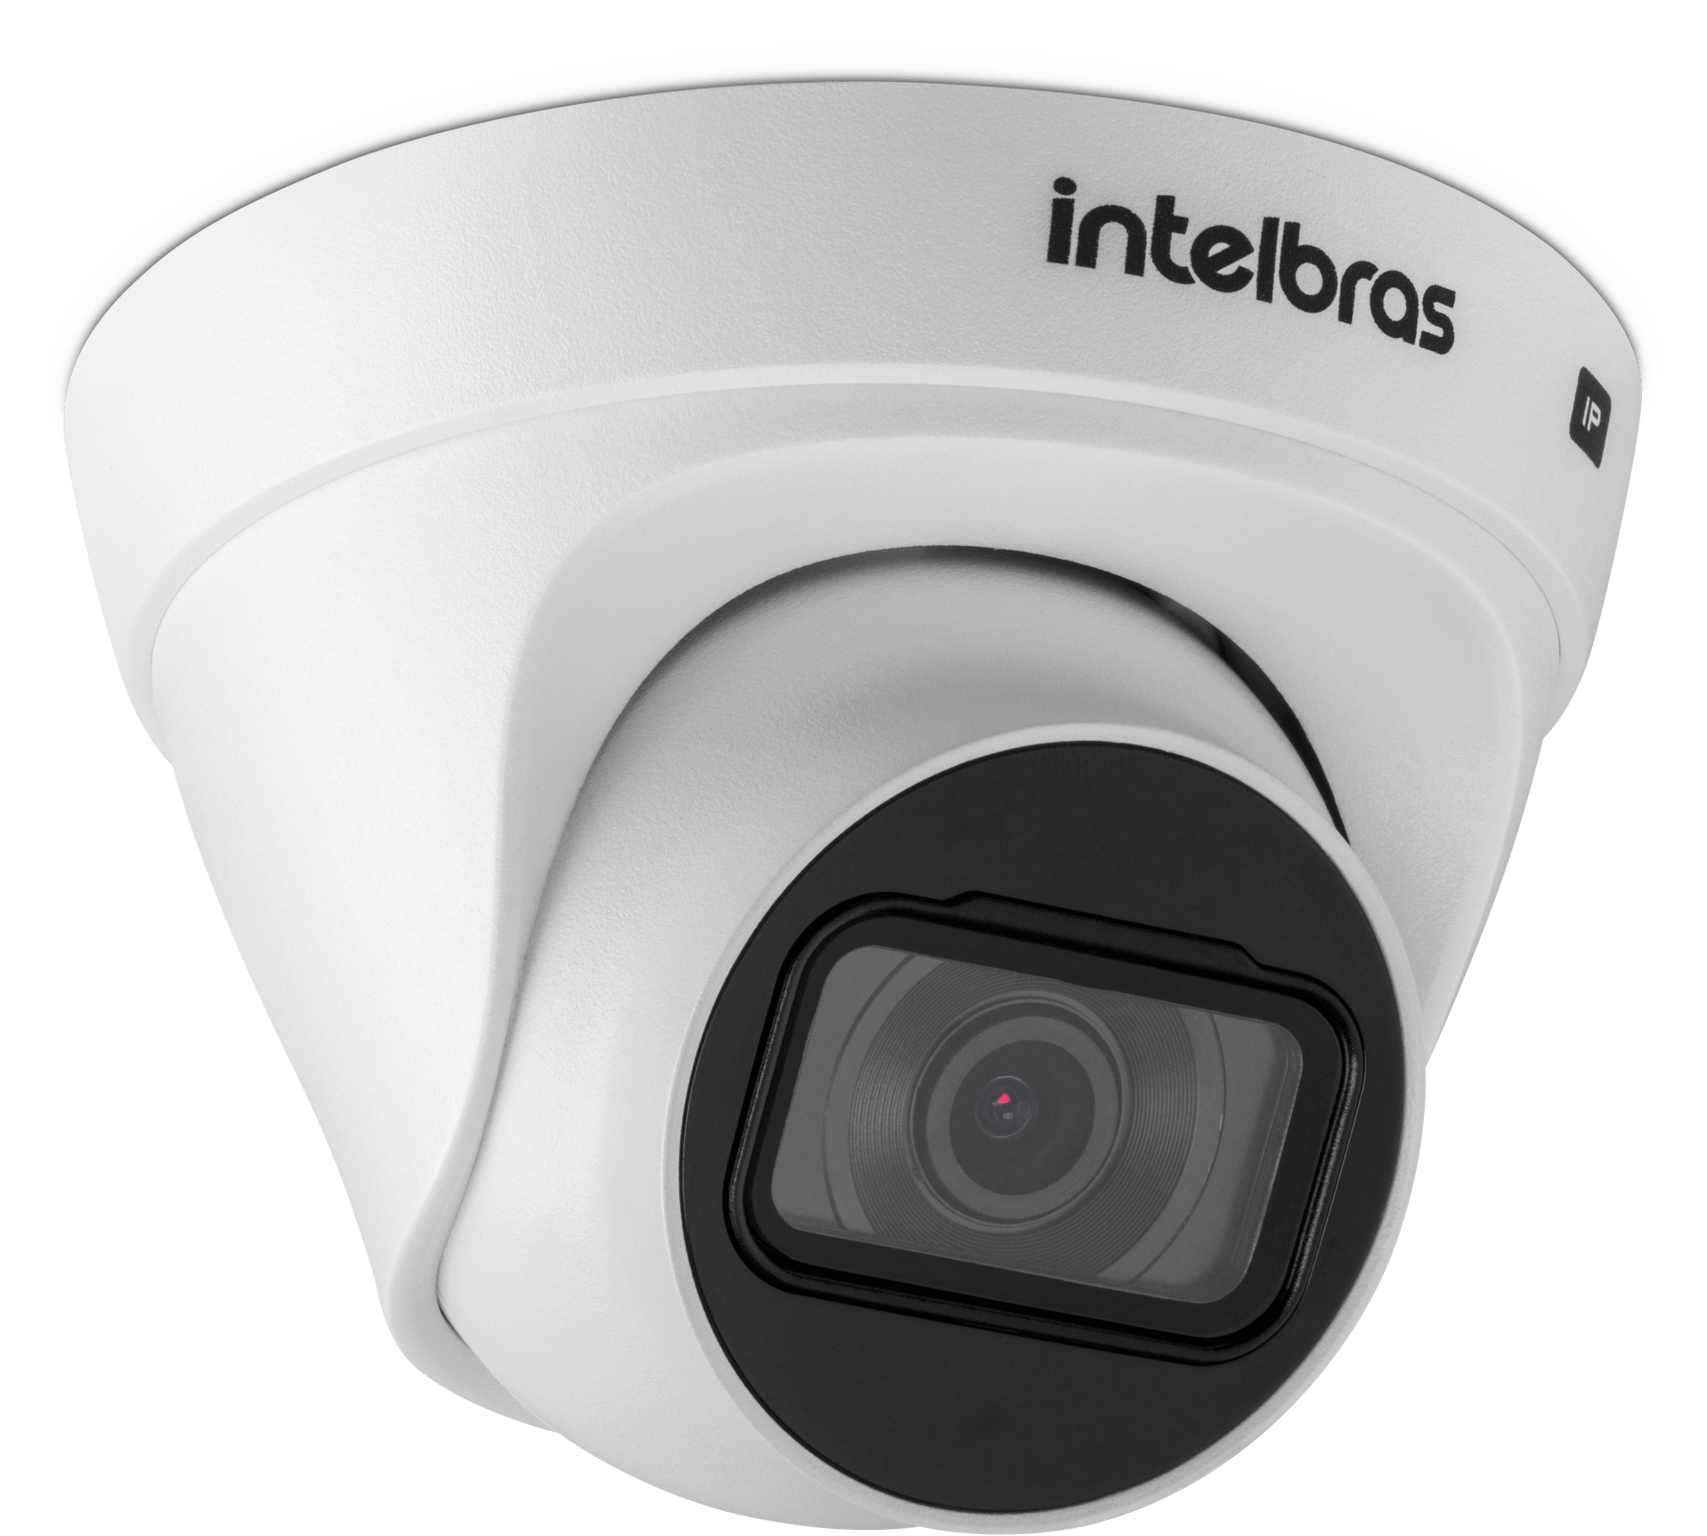 Camera de Segurança Ip Dome Intelbras Vip 1430 D G2 Full Hd 4mp Lente 2.8mm Ir Inteligente 30 Metros - 3